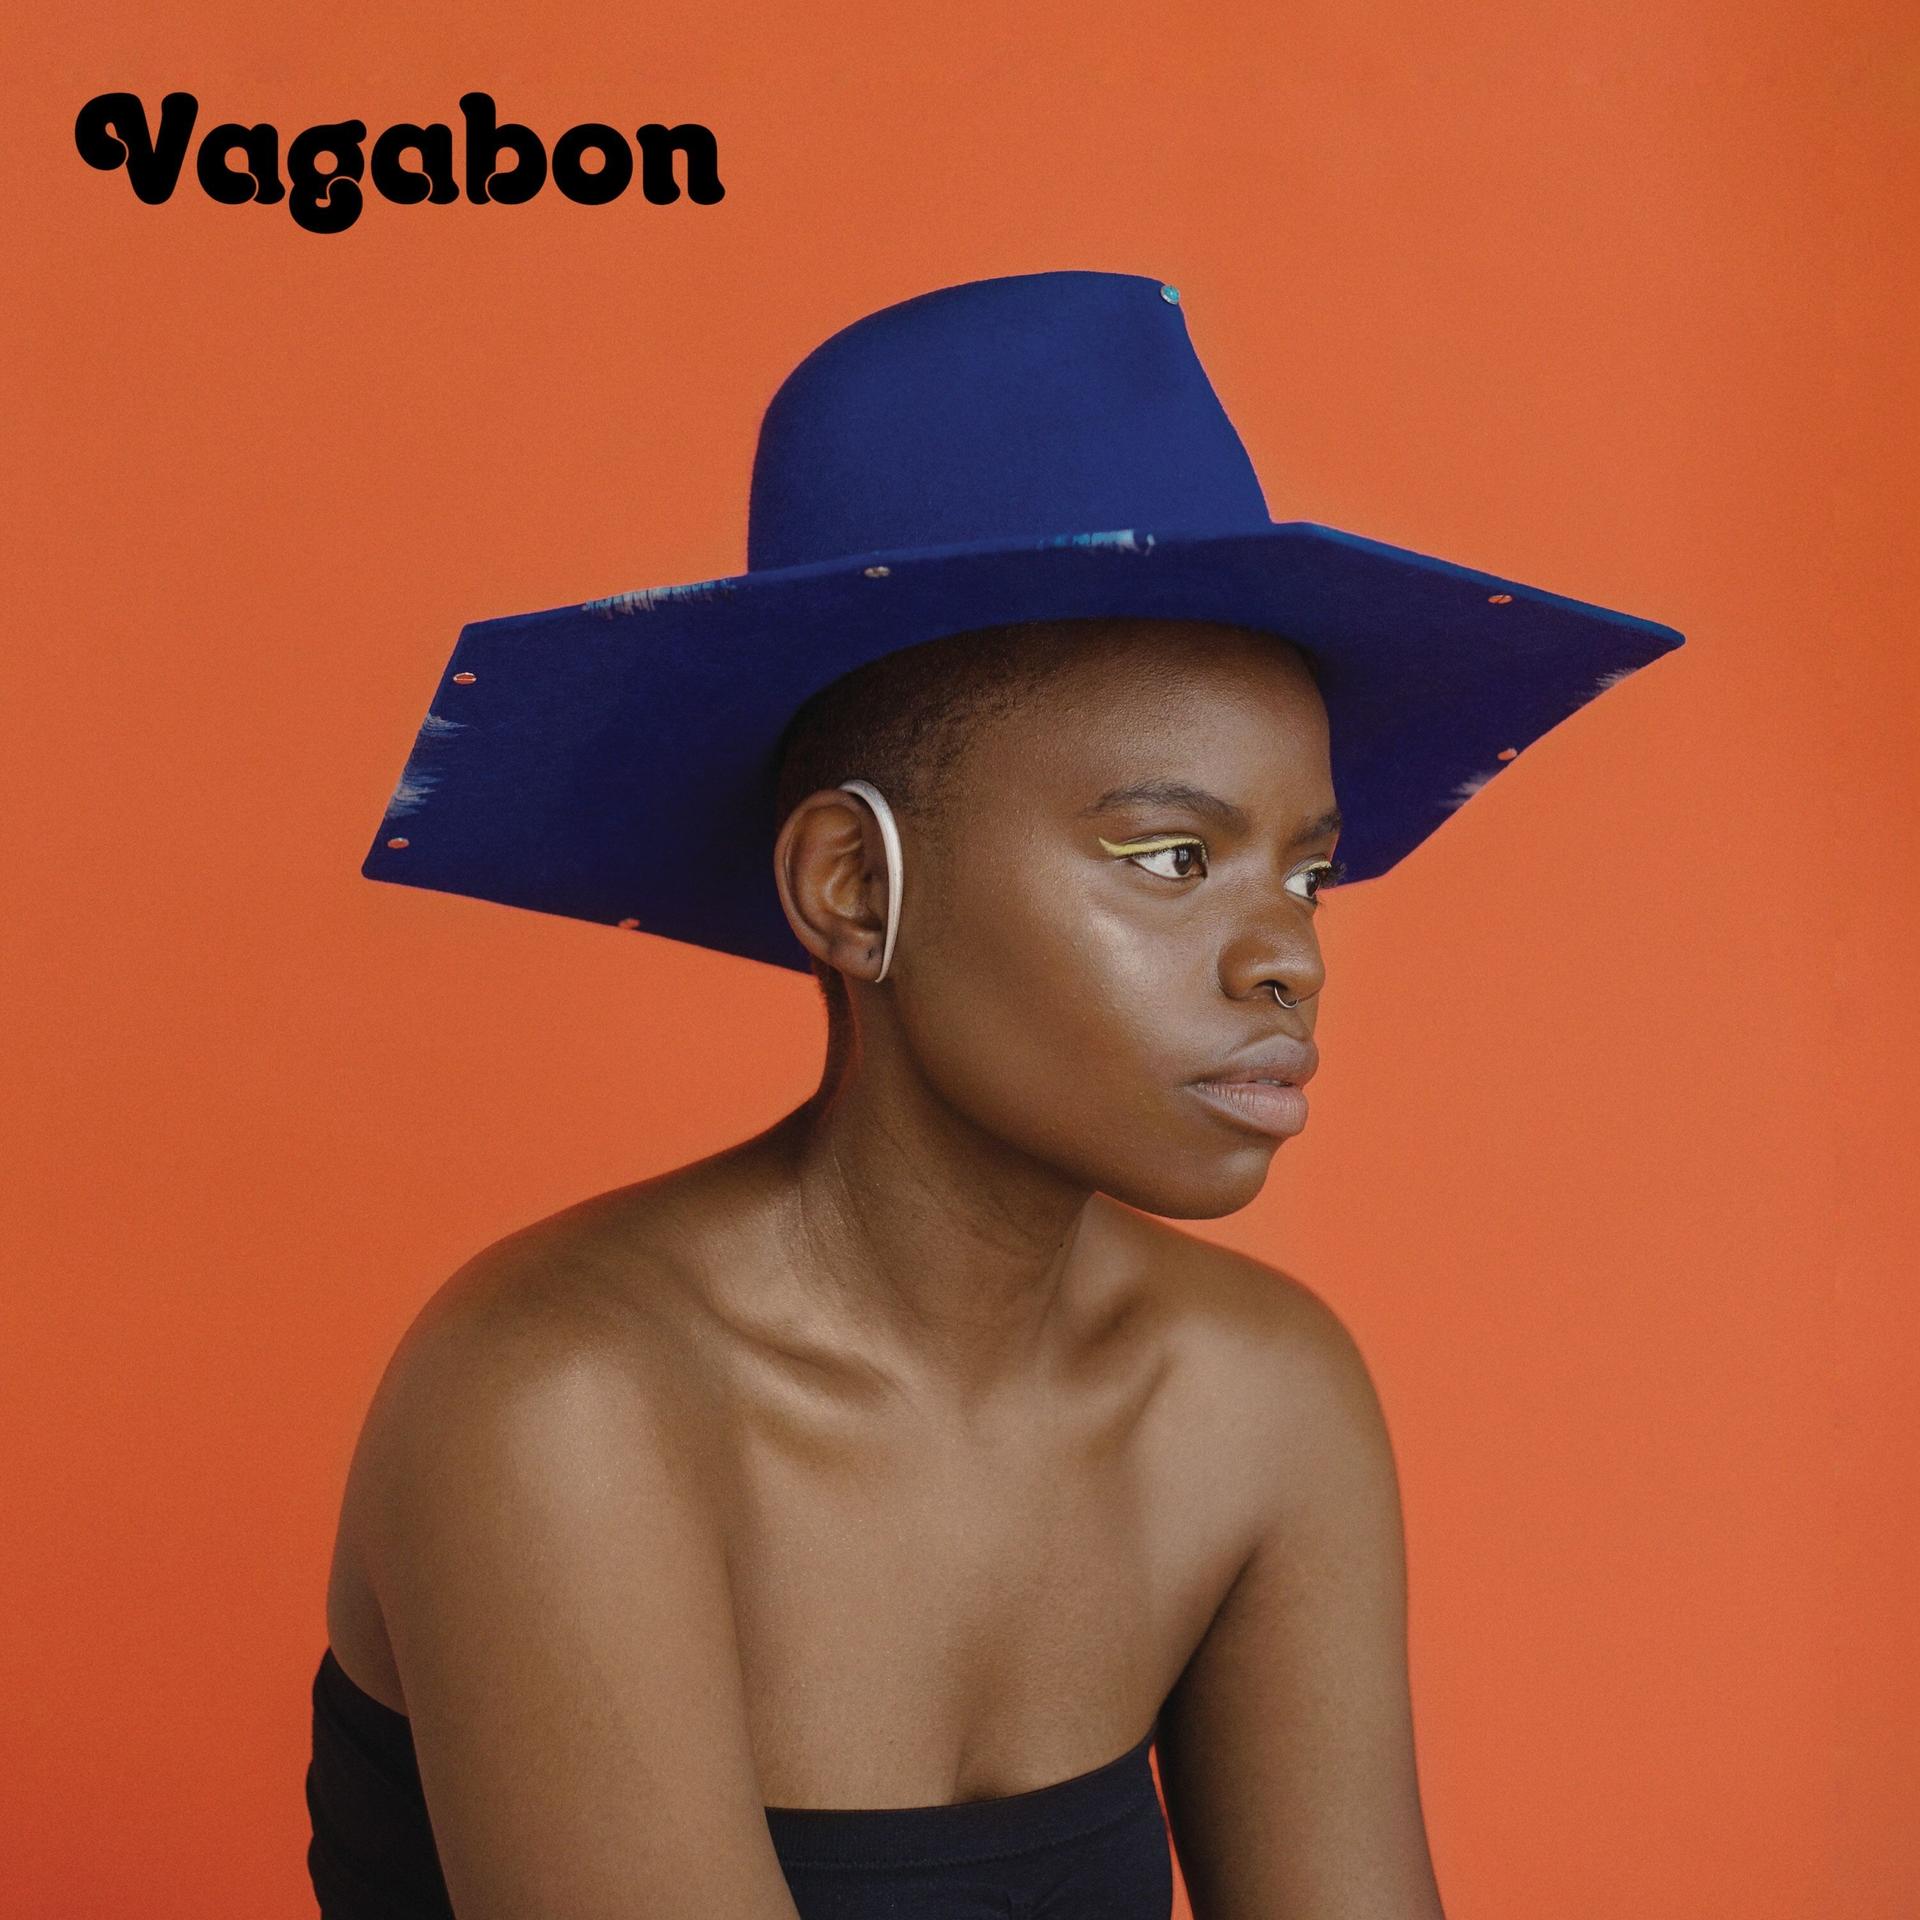 Vagabon’s self-titled second album releases October 18.